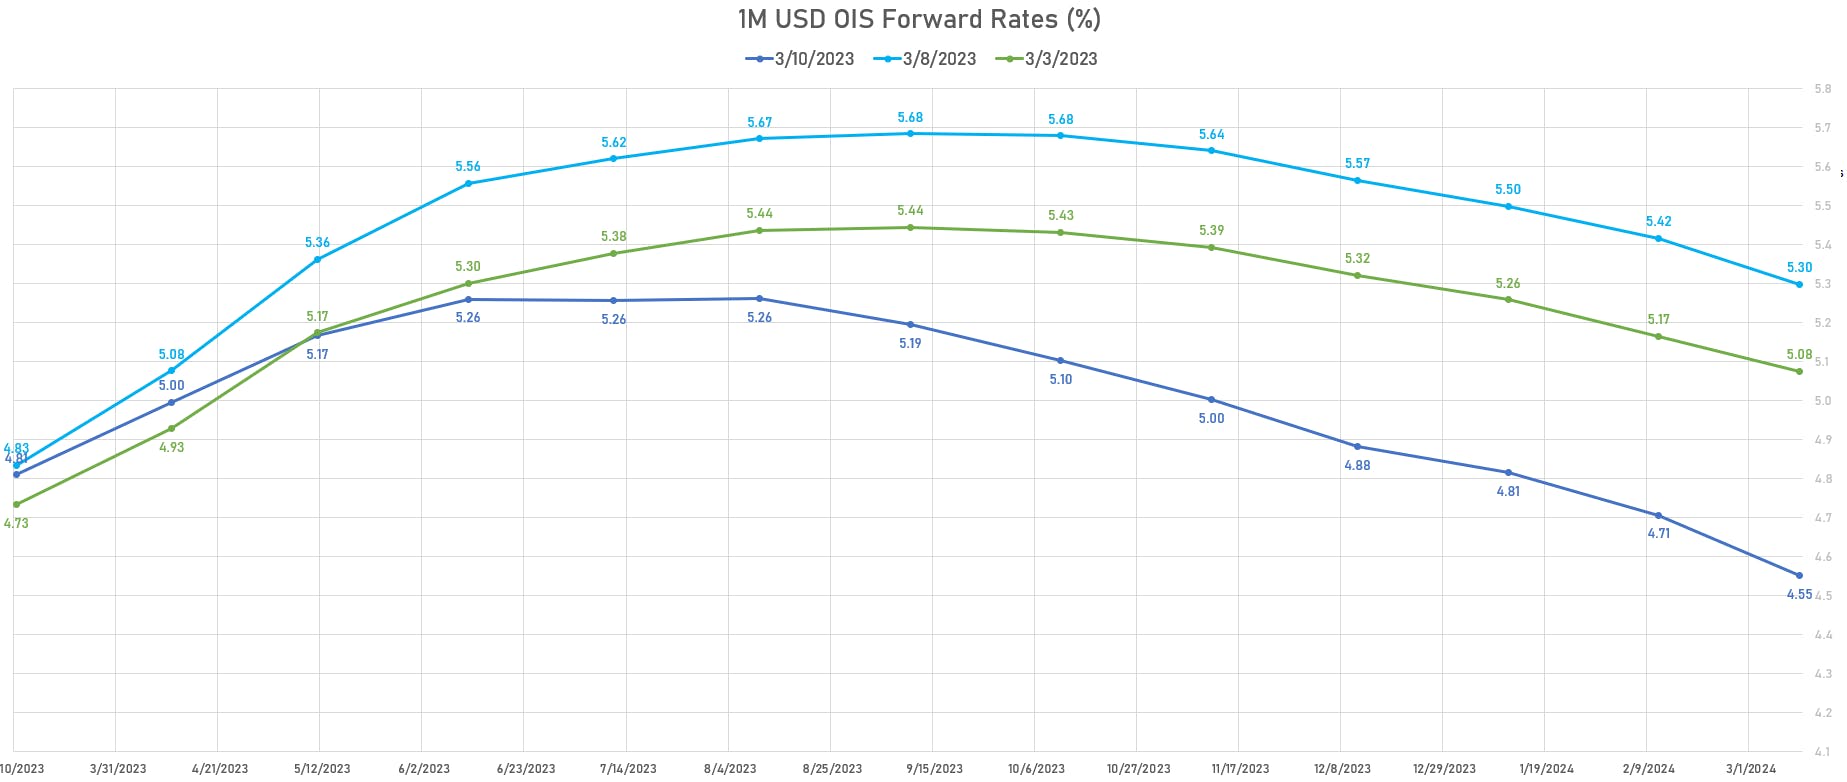 1M USD OIS Forward Curve | Sources: phipost.com, Refinitiv data